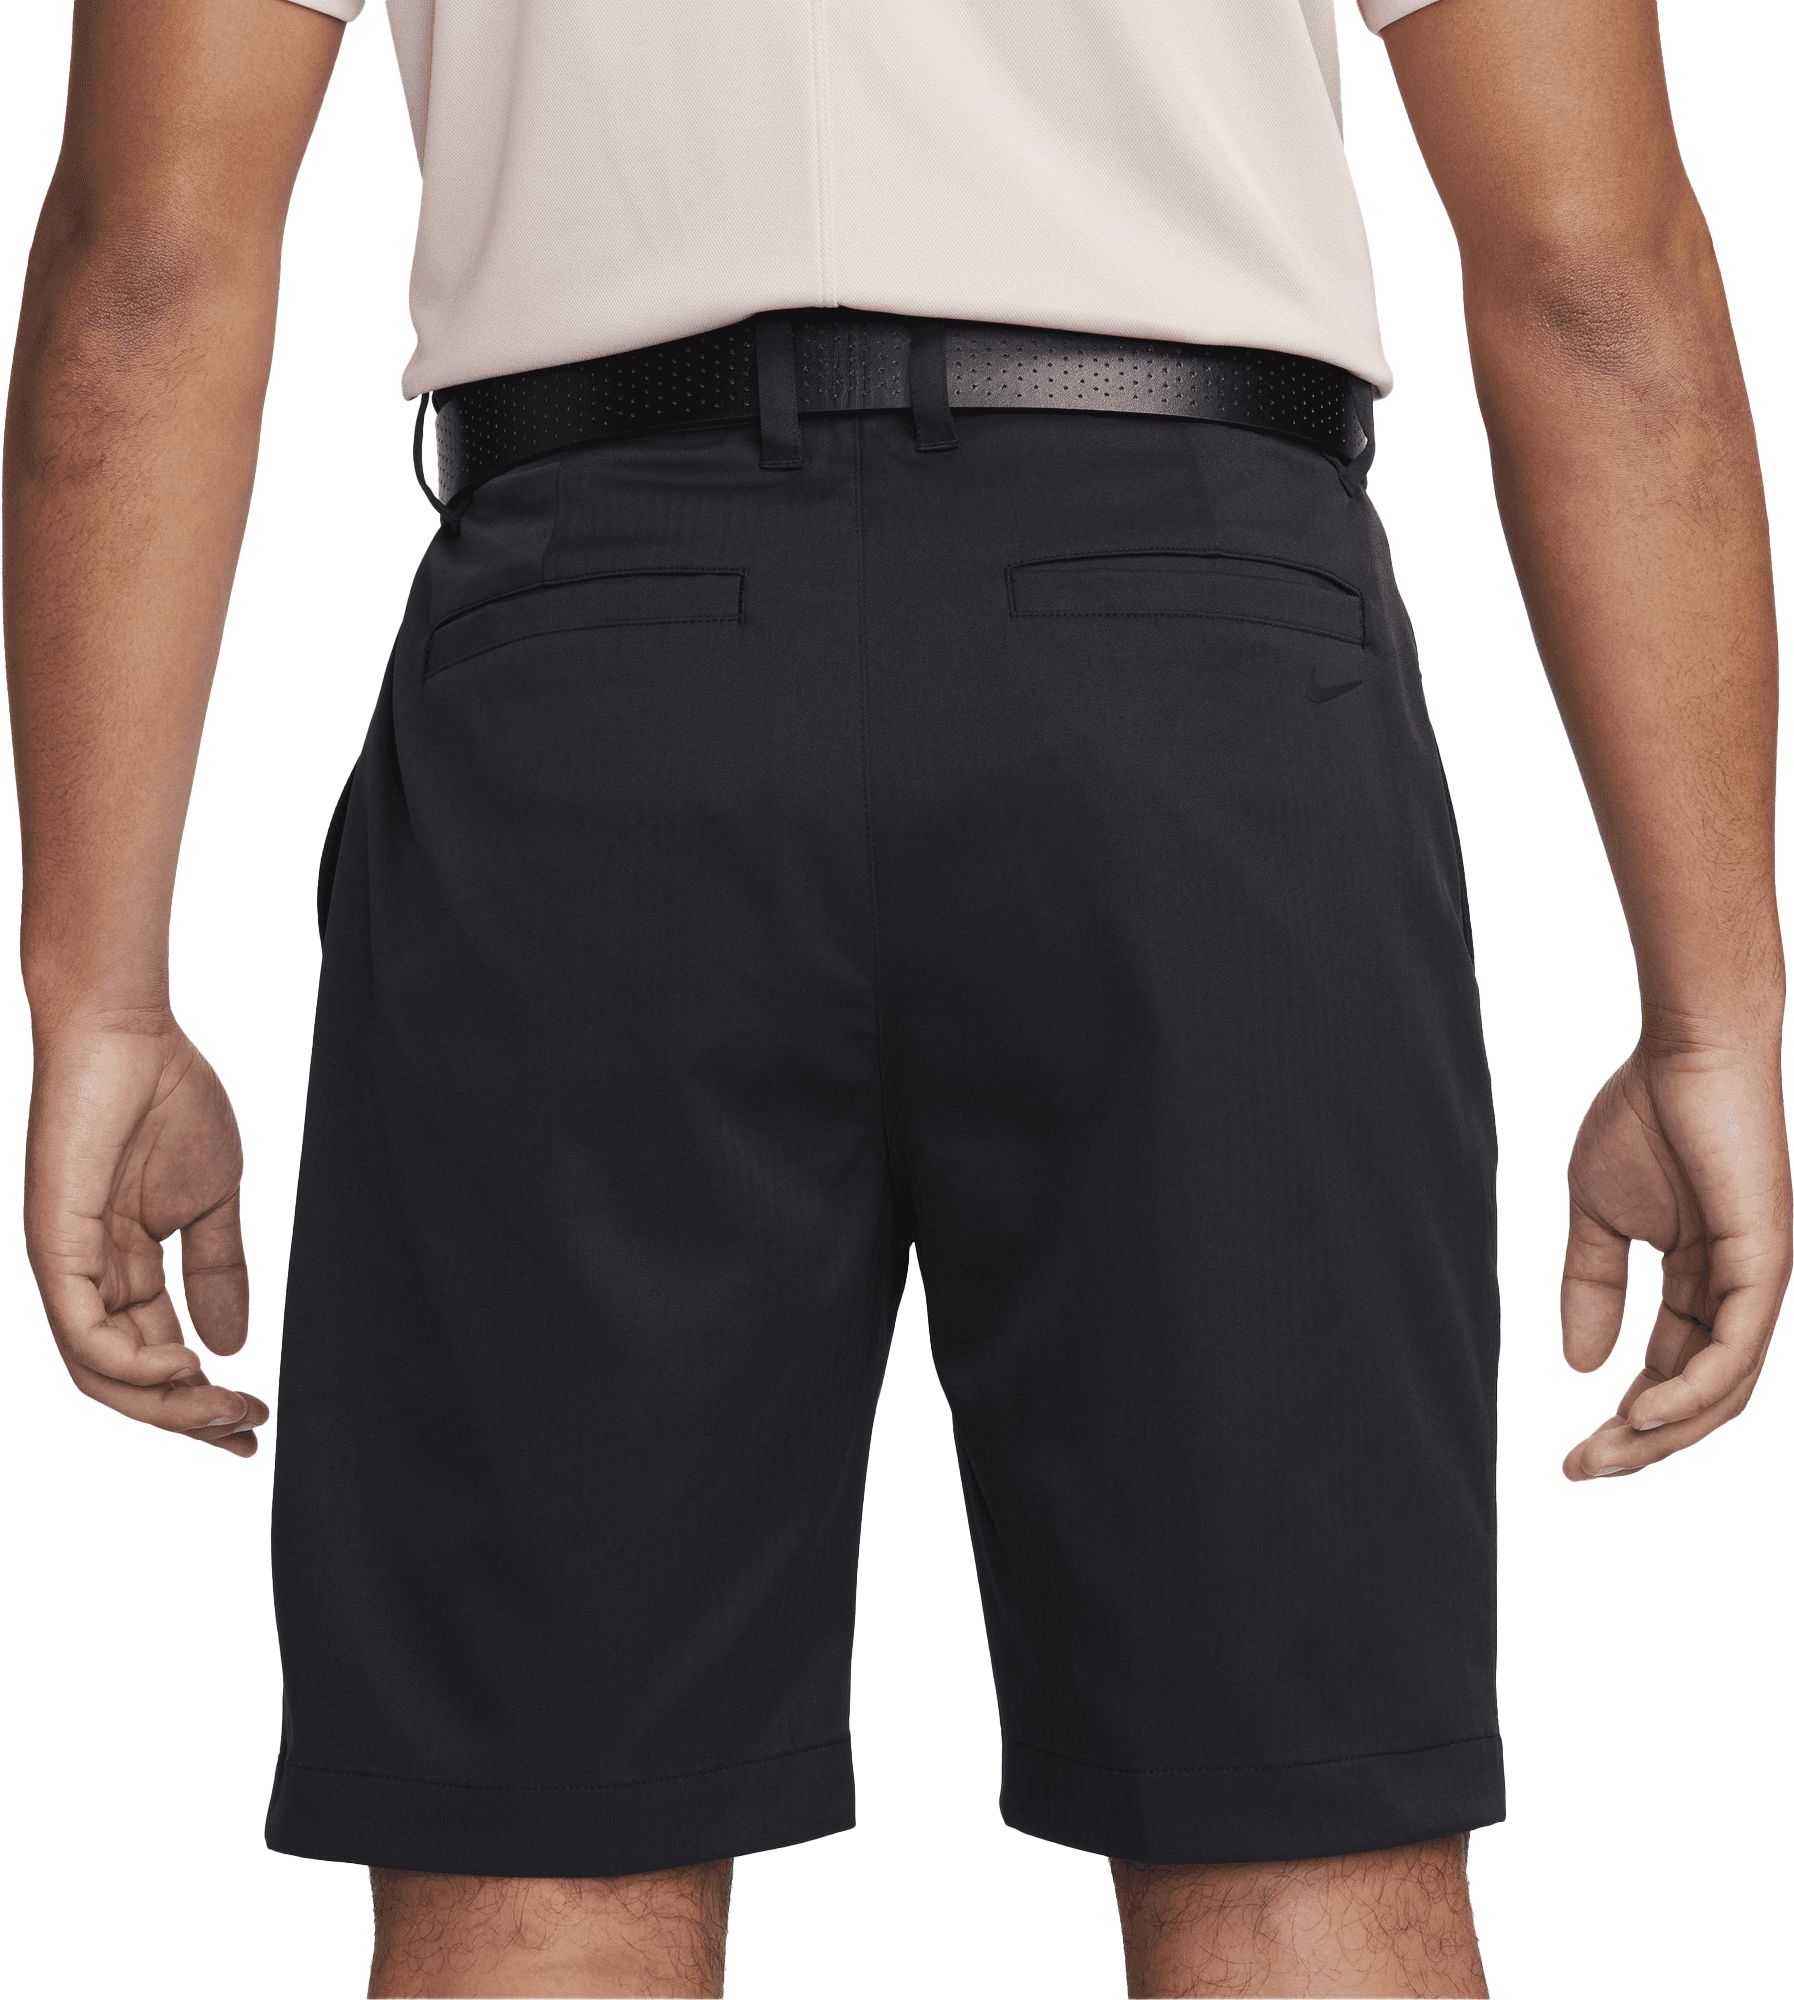 NIKE, Nike Tour Men's 8" Chino Golf Short